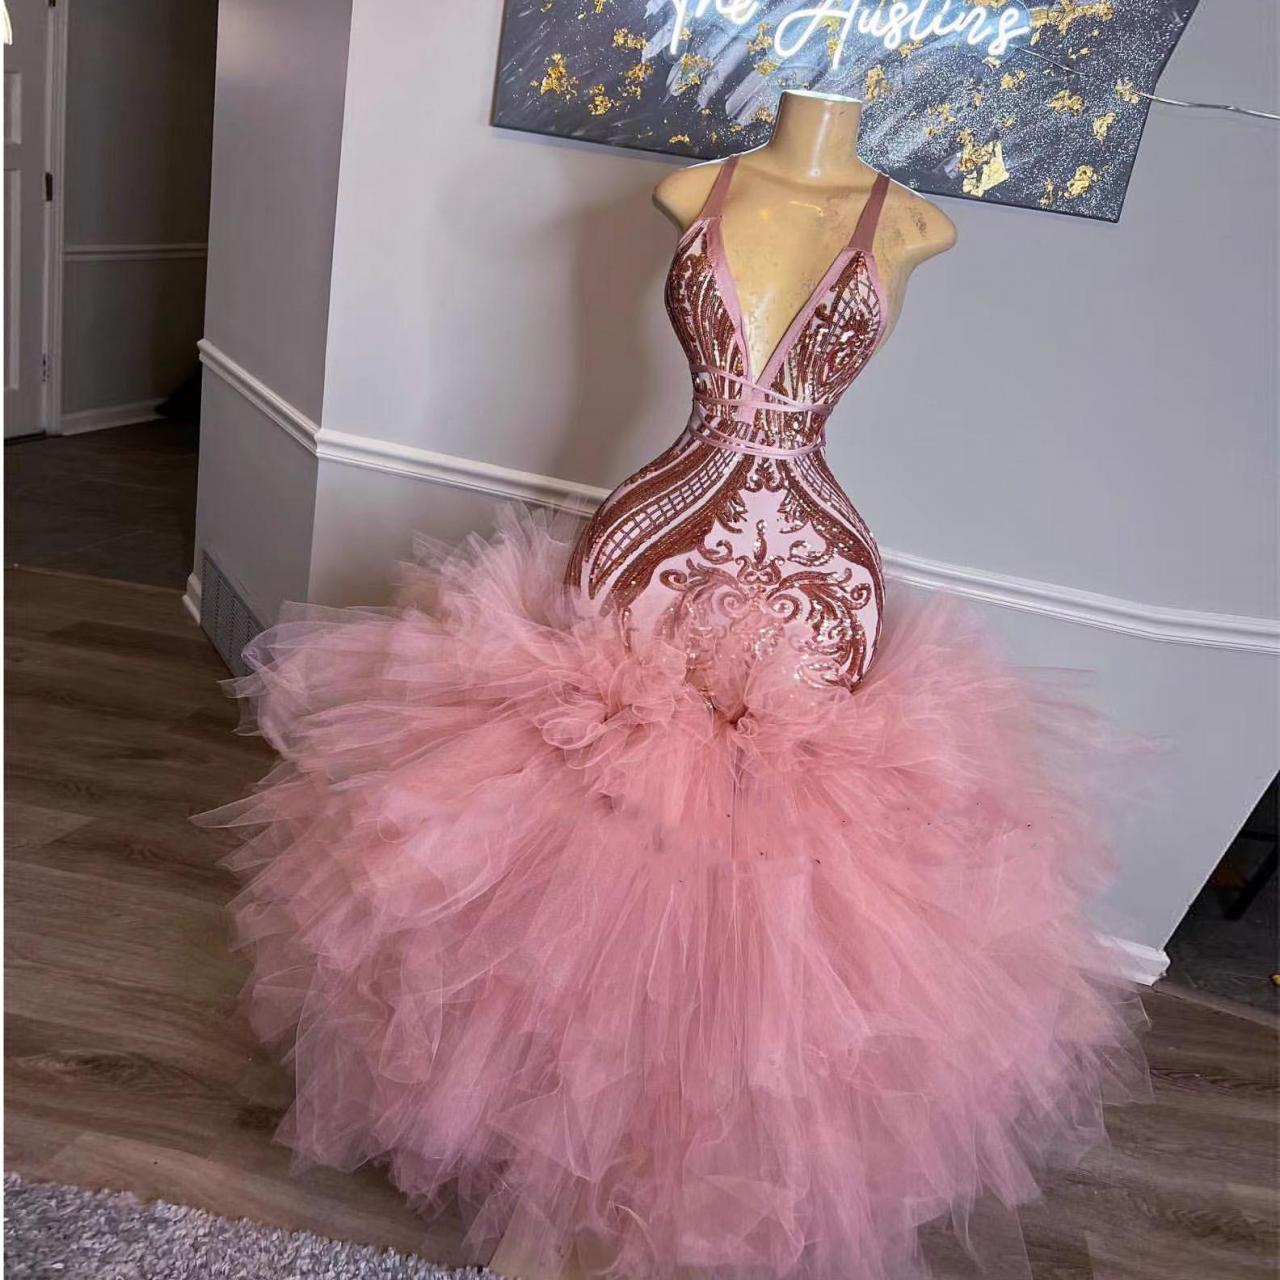 Rose Pink Prom Dresses, Robes De Cocktail, Sparkly Prom Dresses, Spaghetti Strap Prom Dresses, Pageant Dresses For Women, Formal Occasion